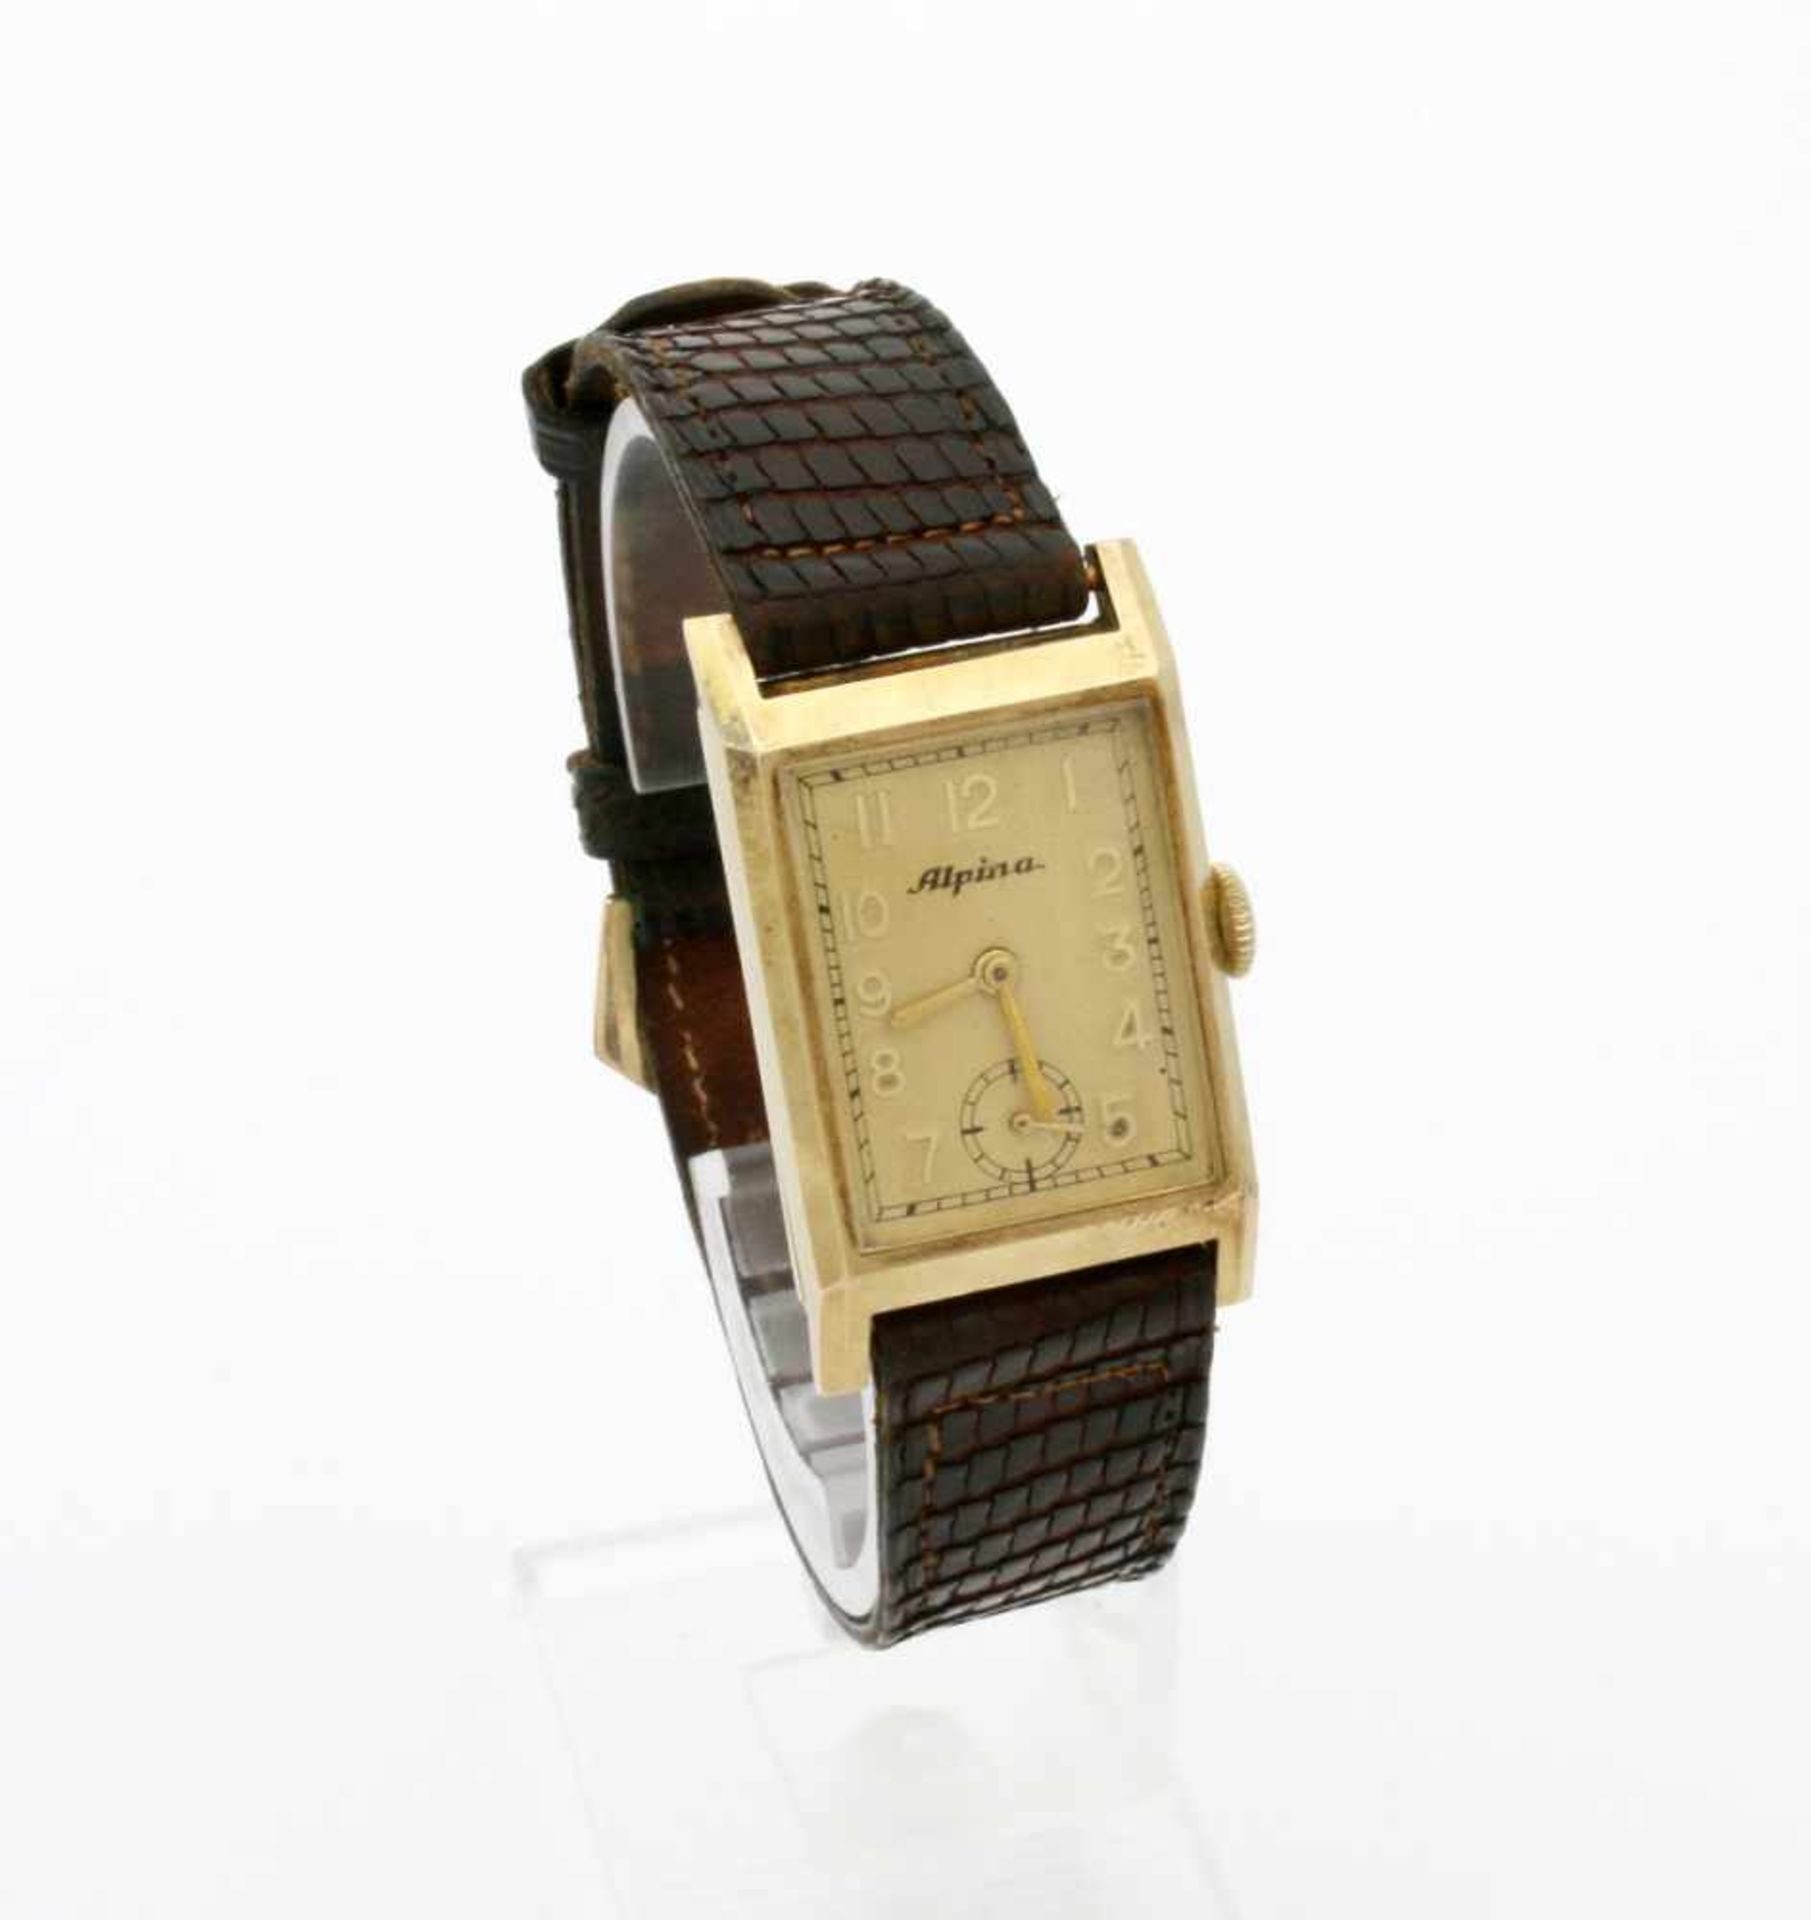 Armbanduhr Alpina Gelbgold um 1950/55 Handaufzugswerk Alpina (SN: 183338), Gehäuse GG 585, Maße: